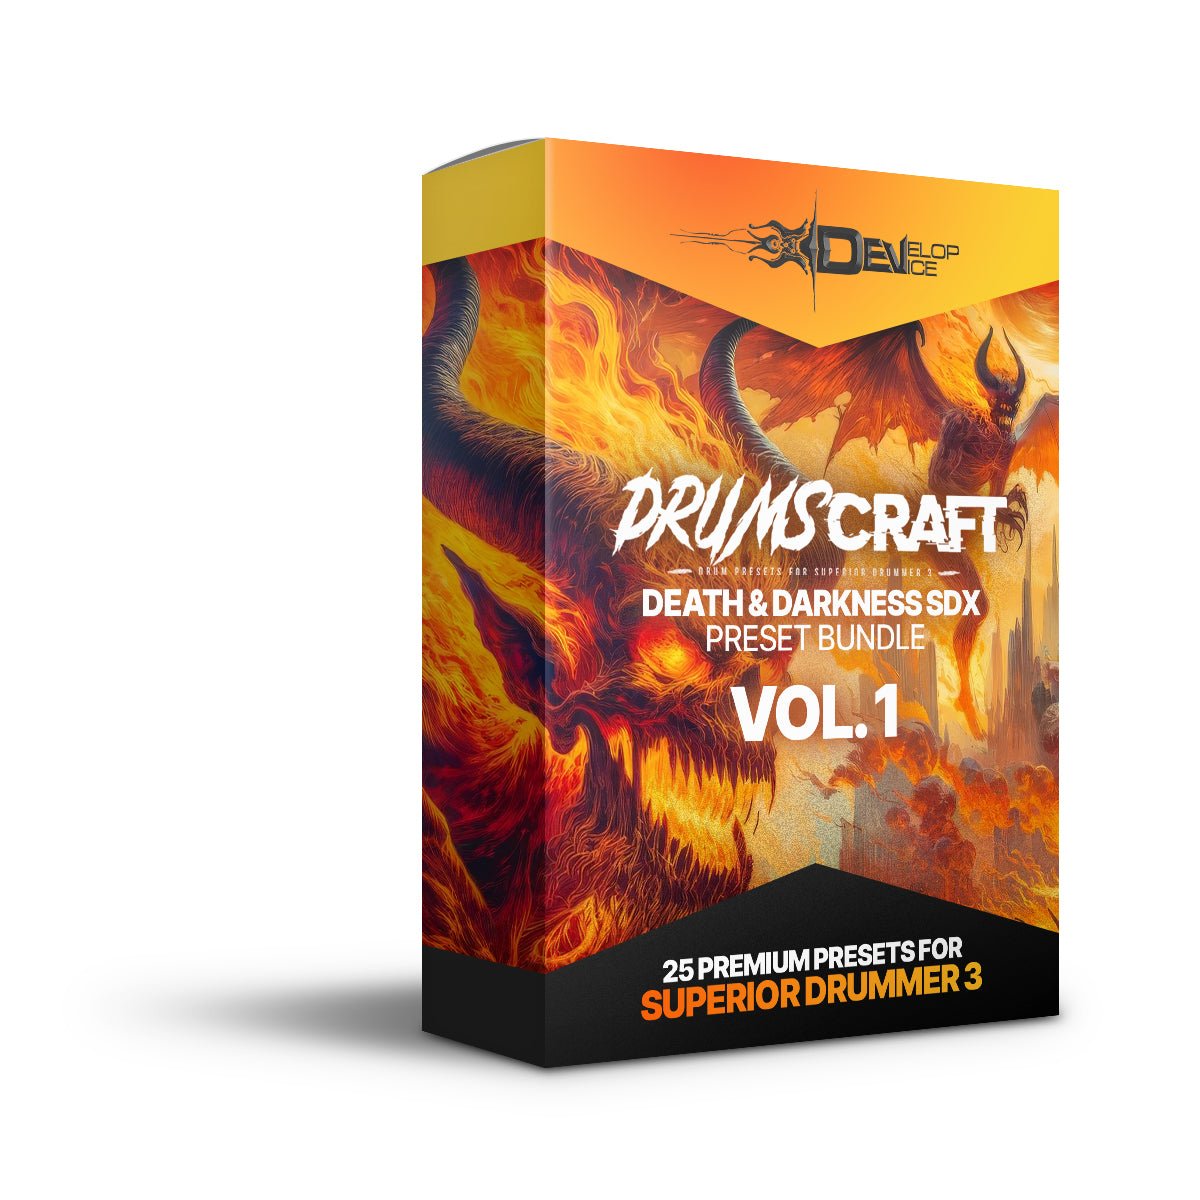 Superior Drummer 3 Preset Bundle for Death & Darkness SDX Vol. 1 - Superior Drummer 3 Presets - Develop Device Studio